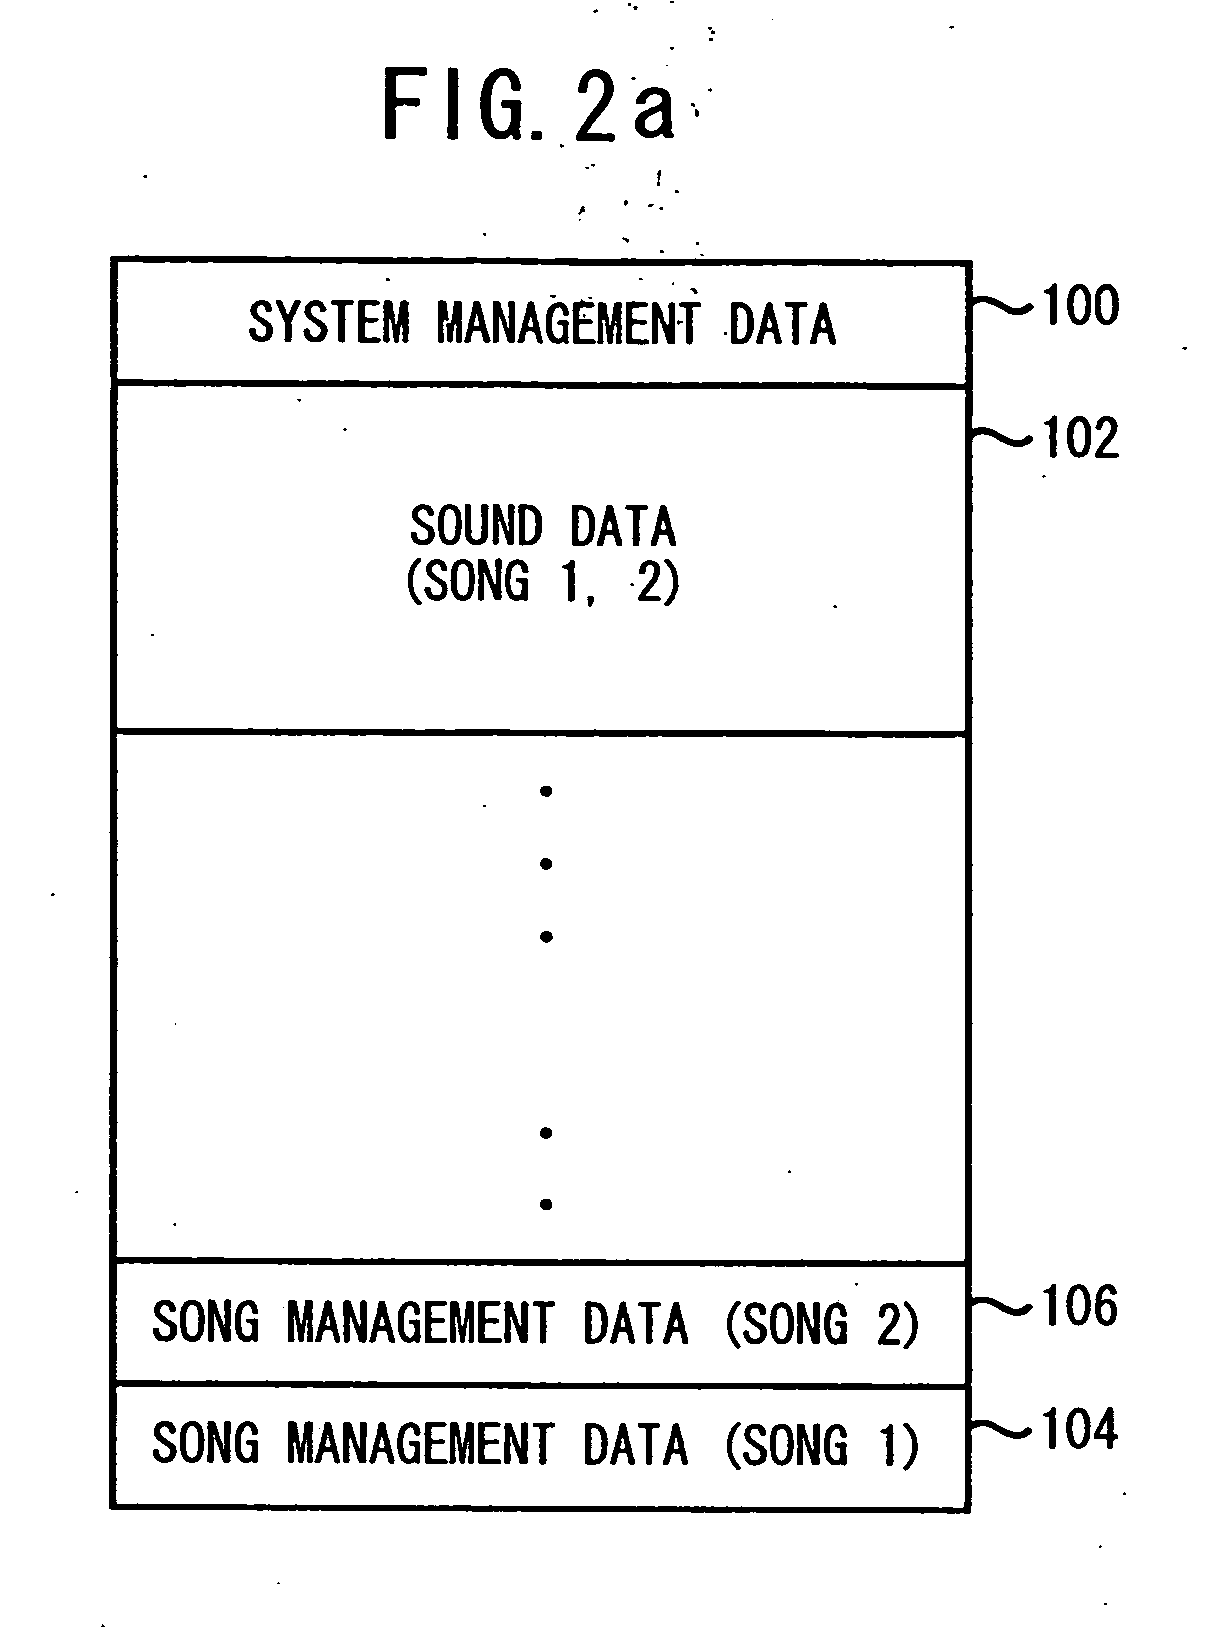 Waveform data processing apparatus